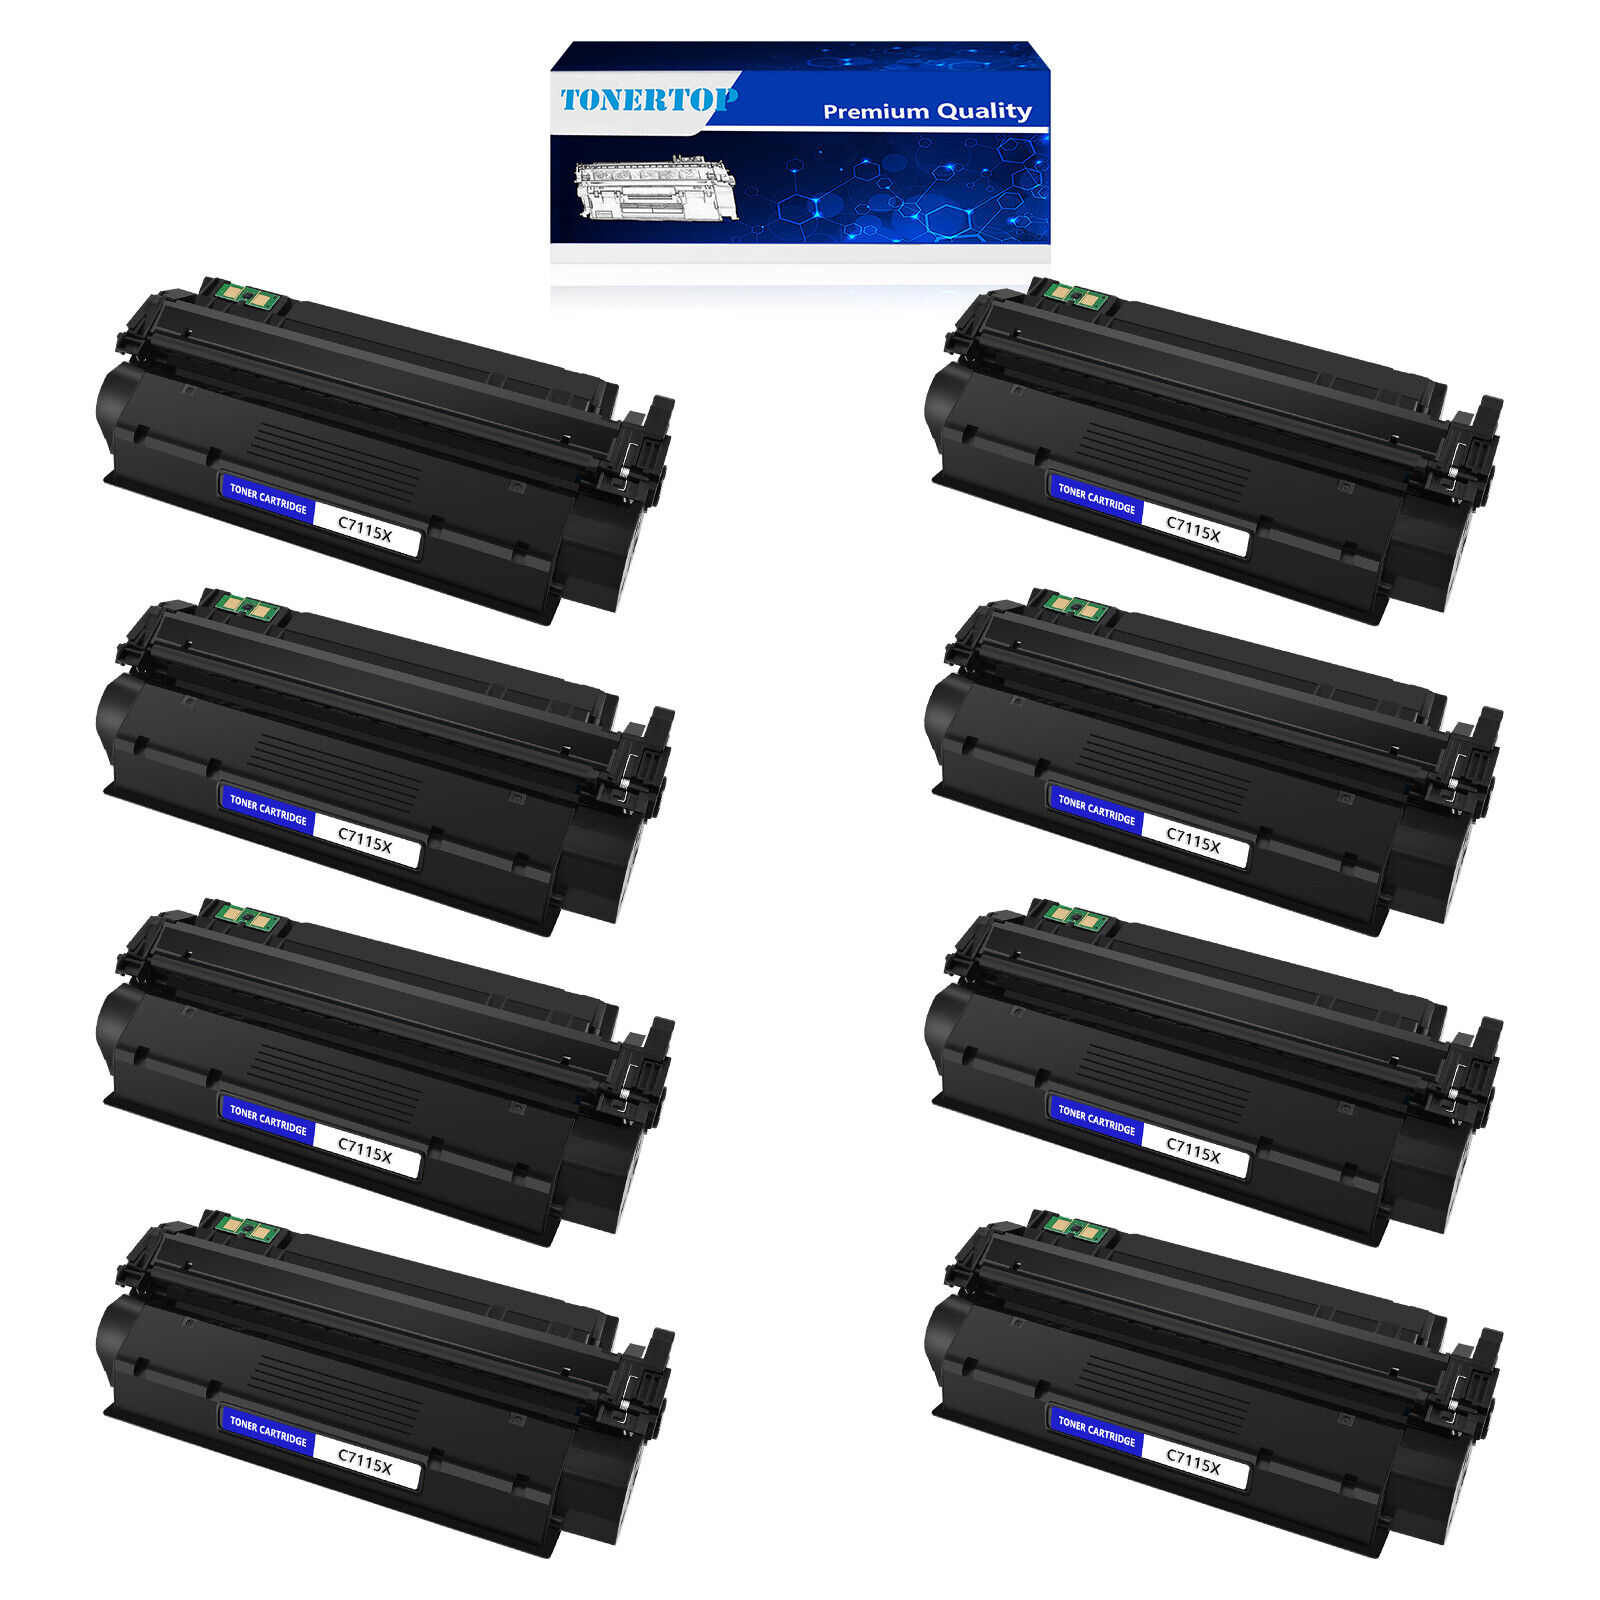 8 Pack Q2613X Toner Cartridge Compatible For HP LaserJet 1300 1300N 1300T 1300XI